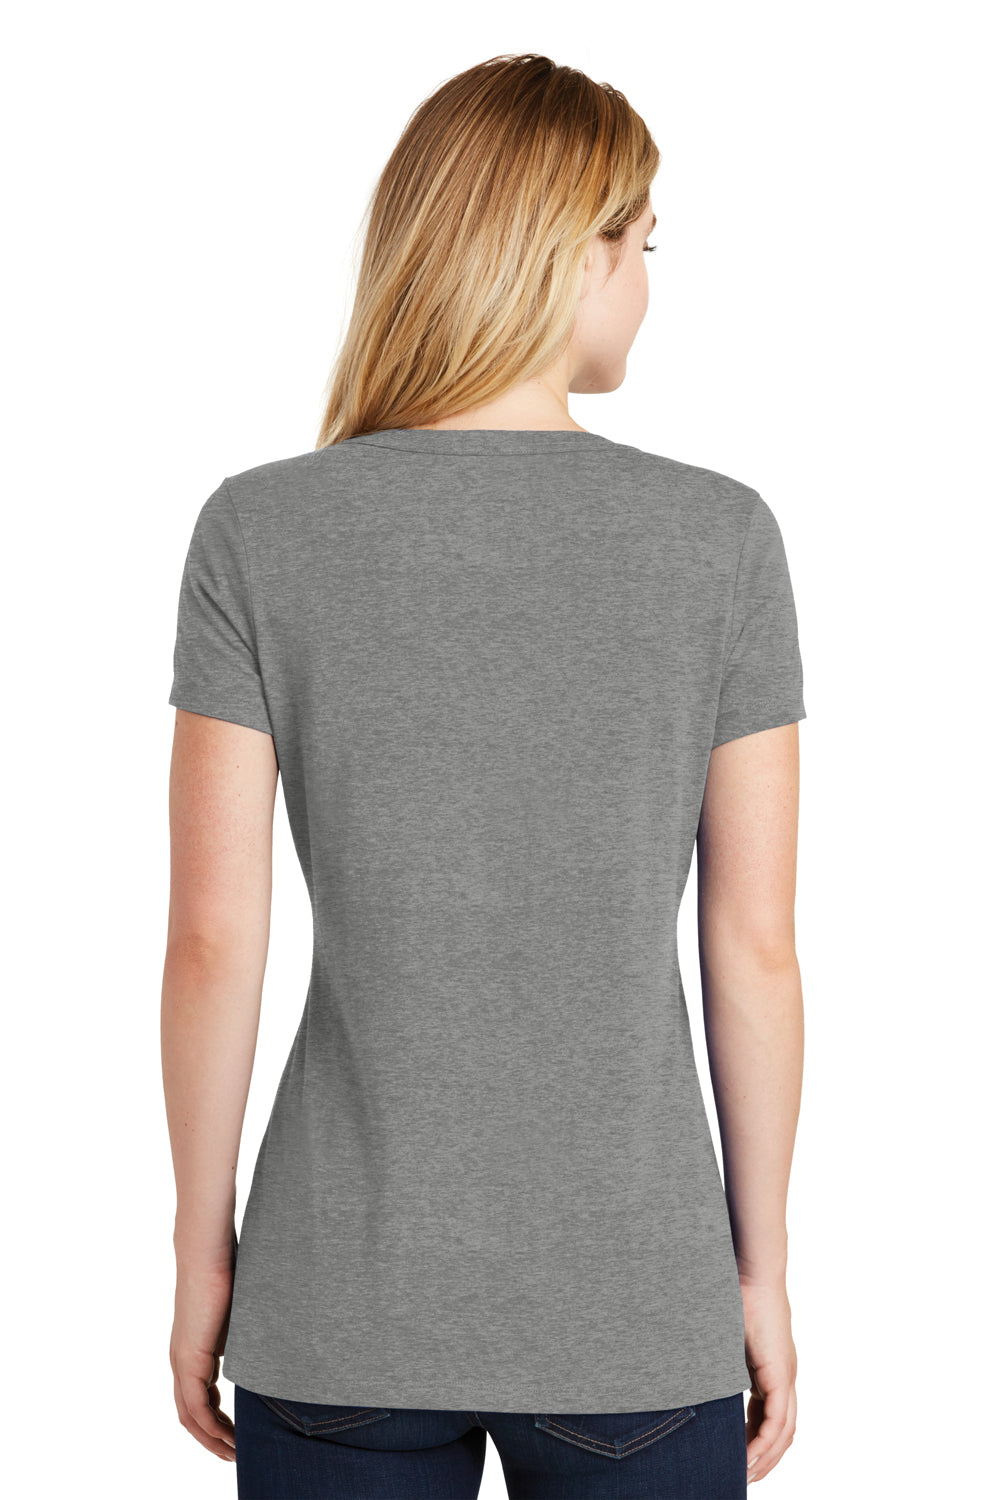 New Era LNEA101 Womens Heritage Short Sleeve V-Neck T-Shirt Heather Shadow Grey Back